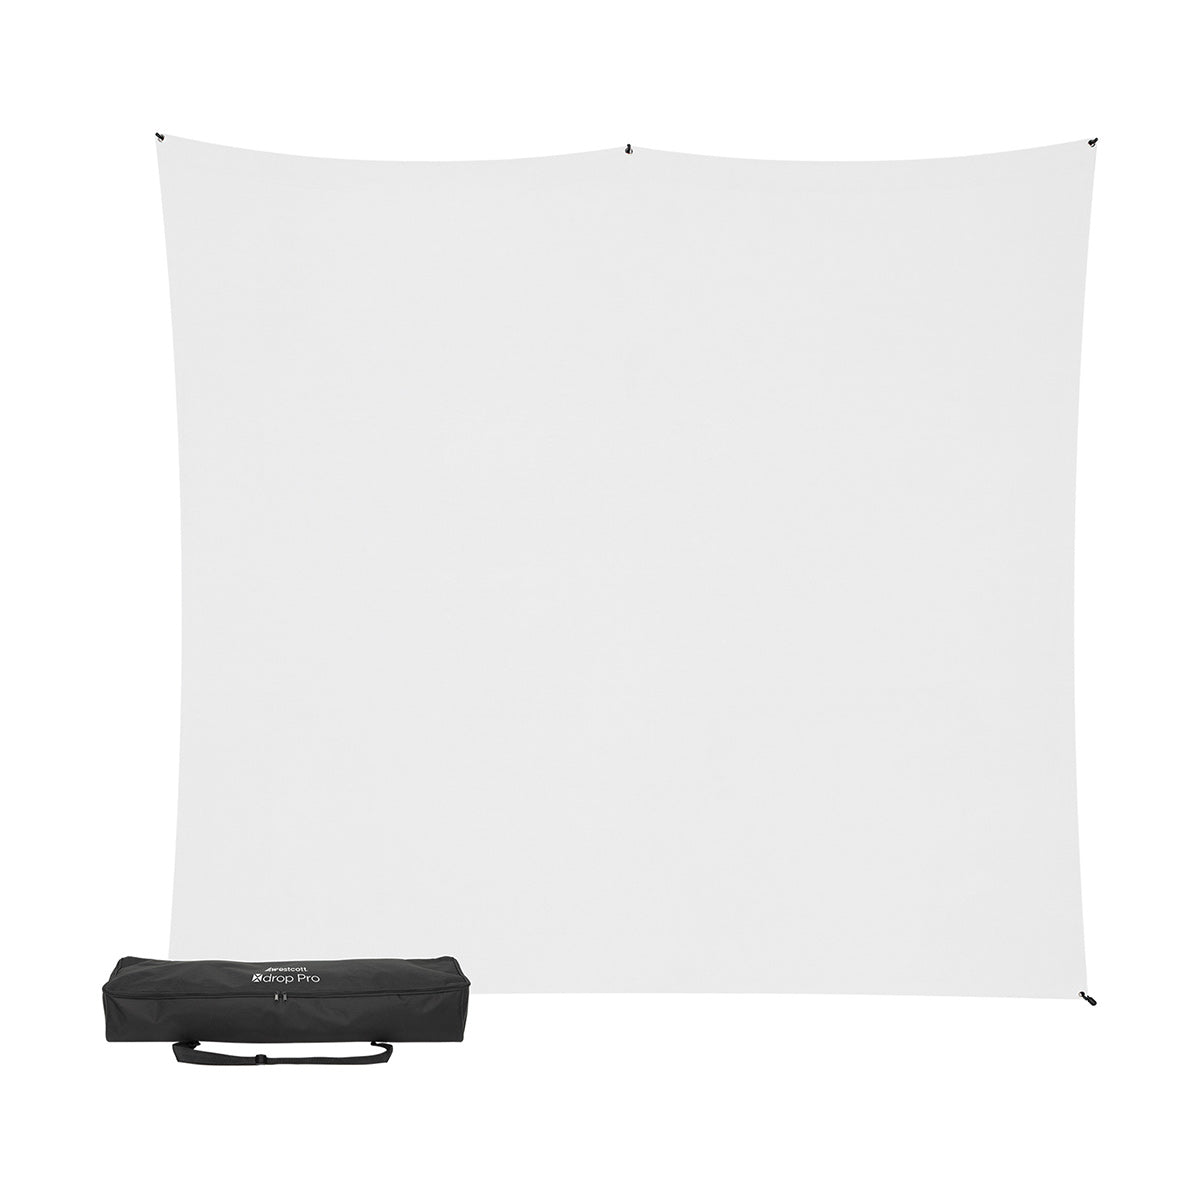 Westcott X-Drop Pro Wrinkle-Resistant Backdrop Kit - High-Key White (8' x 8')